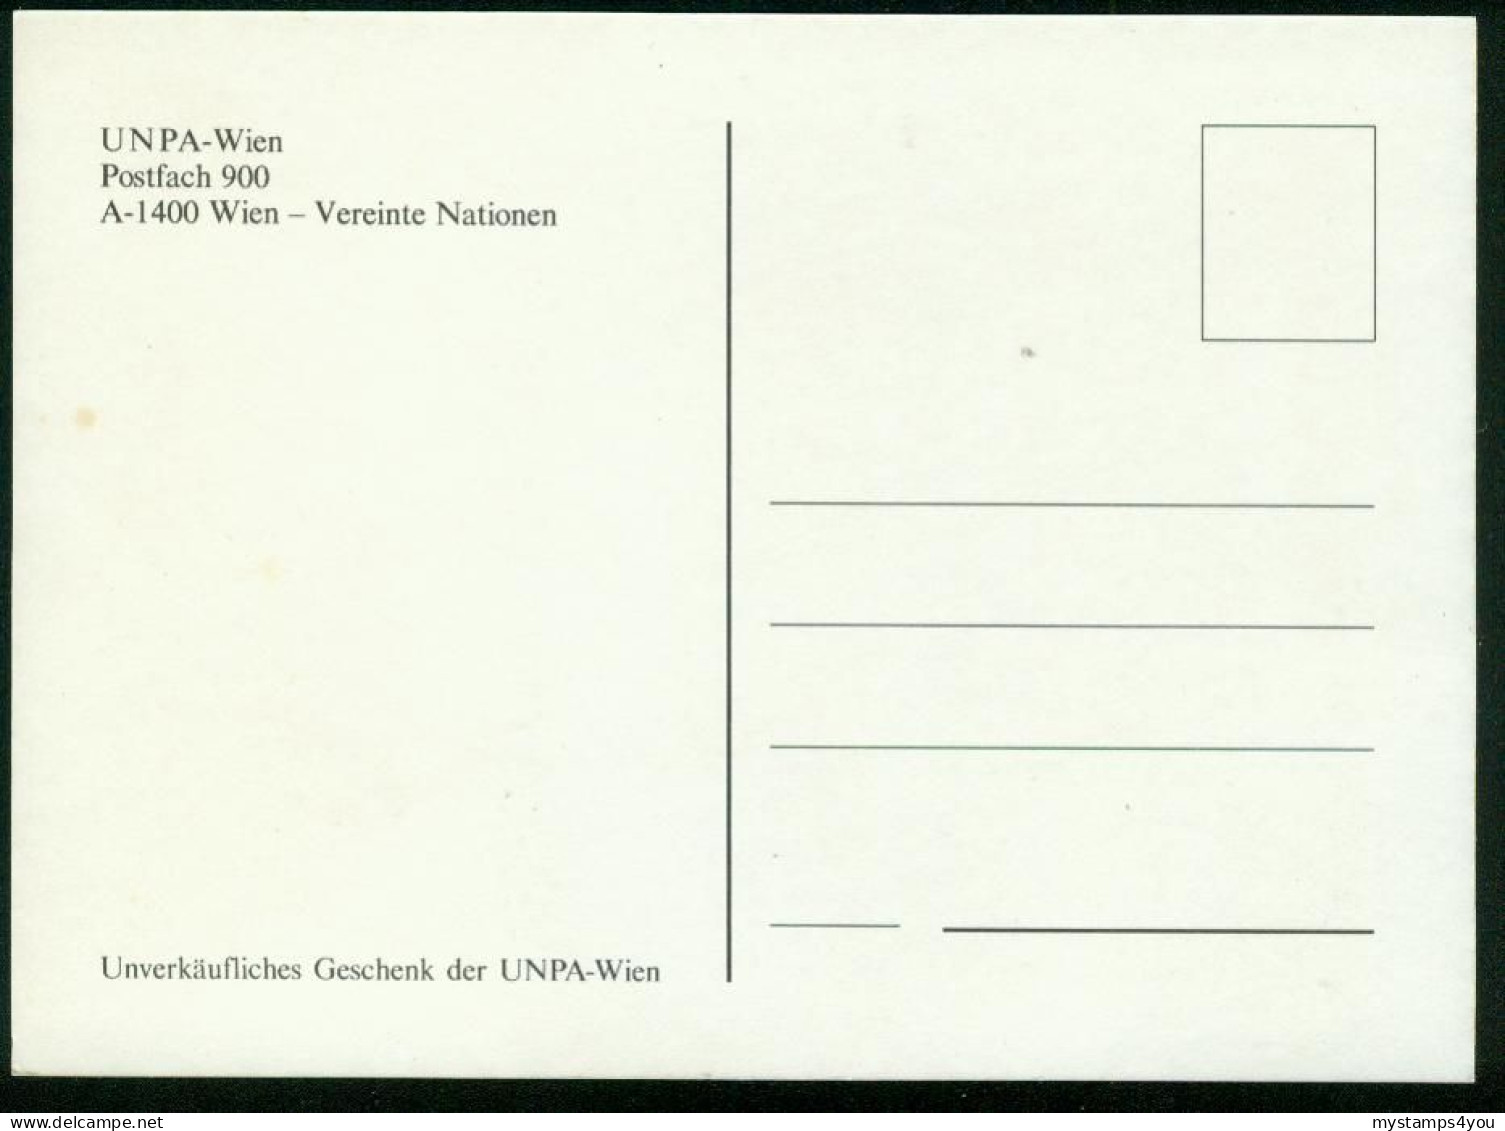 Mk UN New York (UNO) Maximum Card 1989 MiNr 578 | Tenth Anniv Of United Nations Vienna International Centre #max-0078 - Maximum Cards